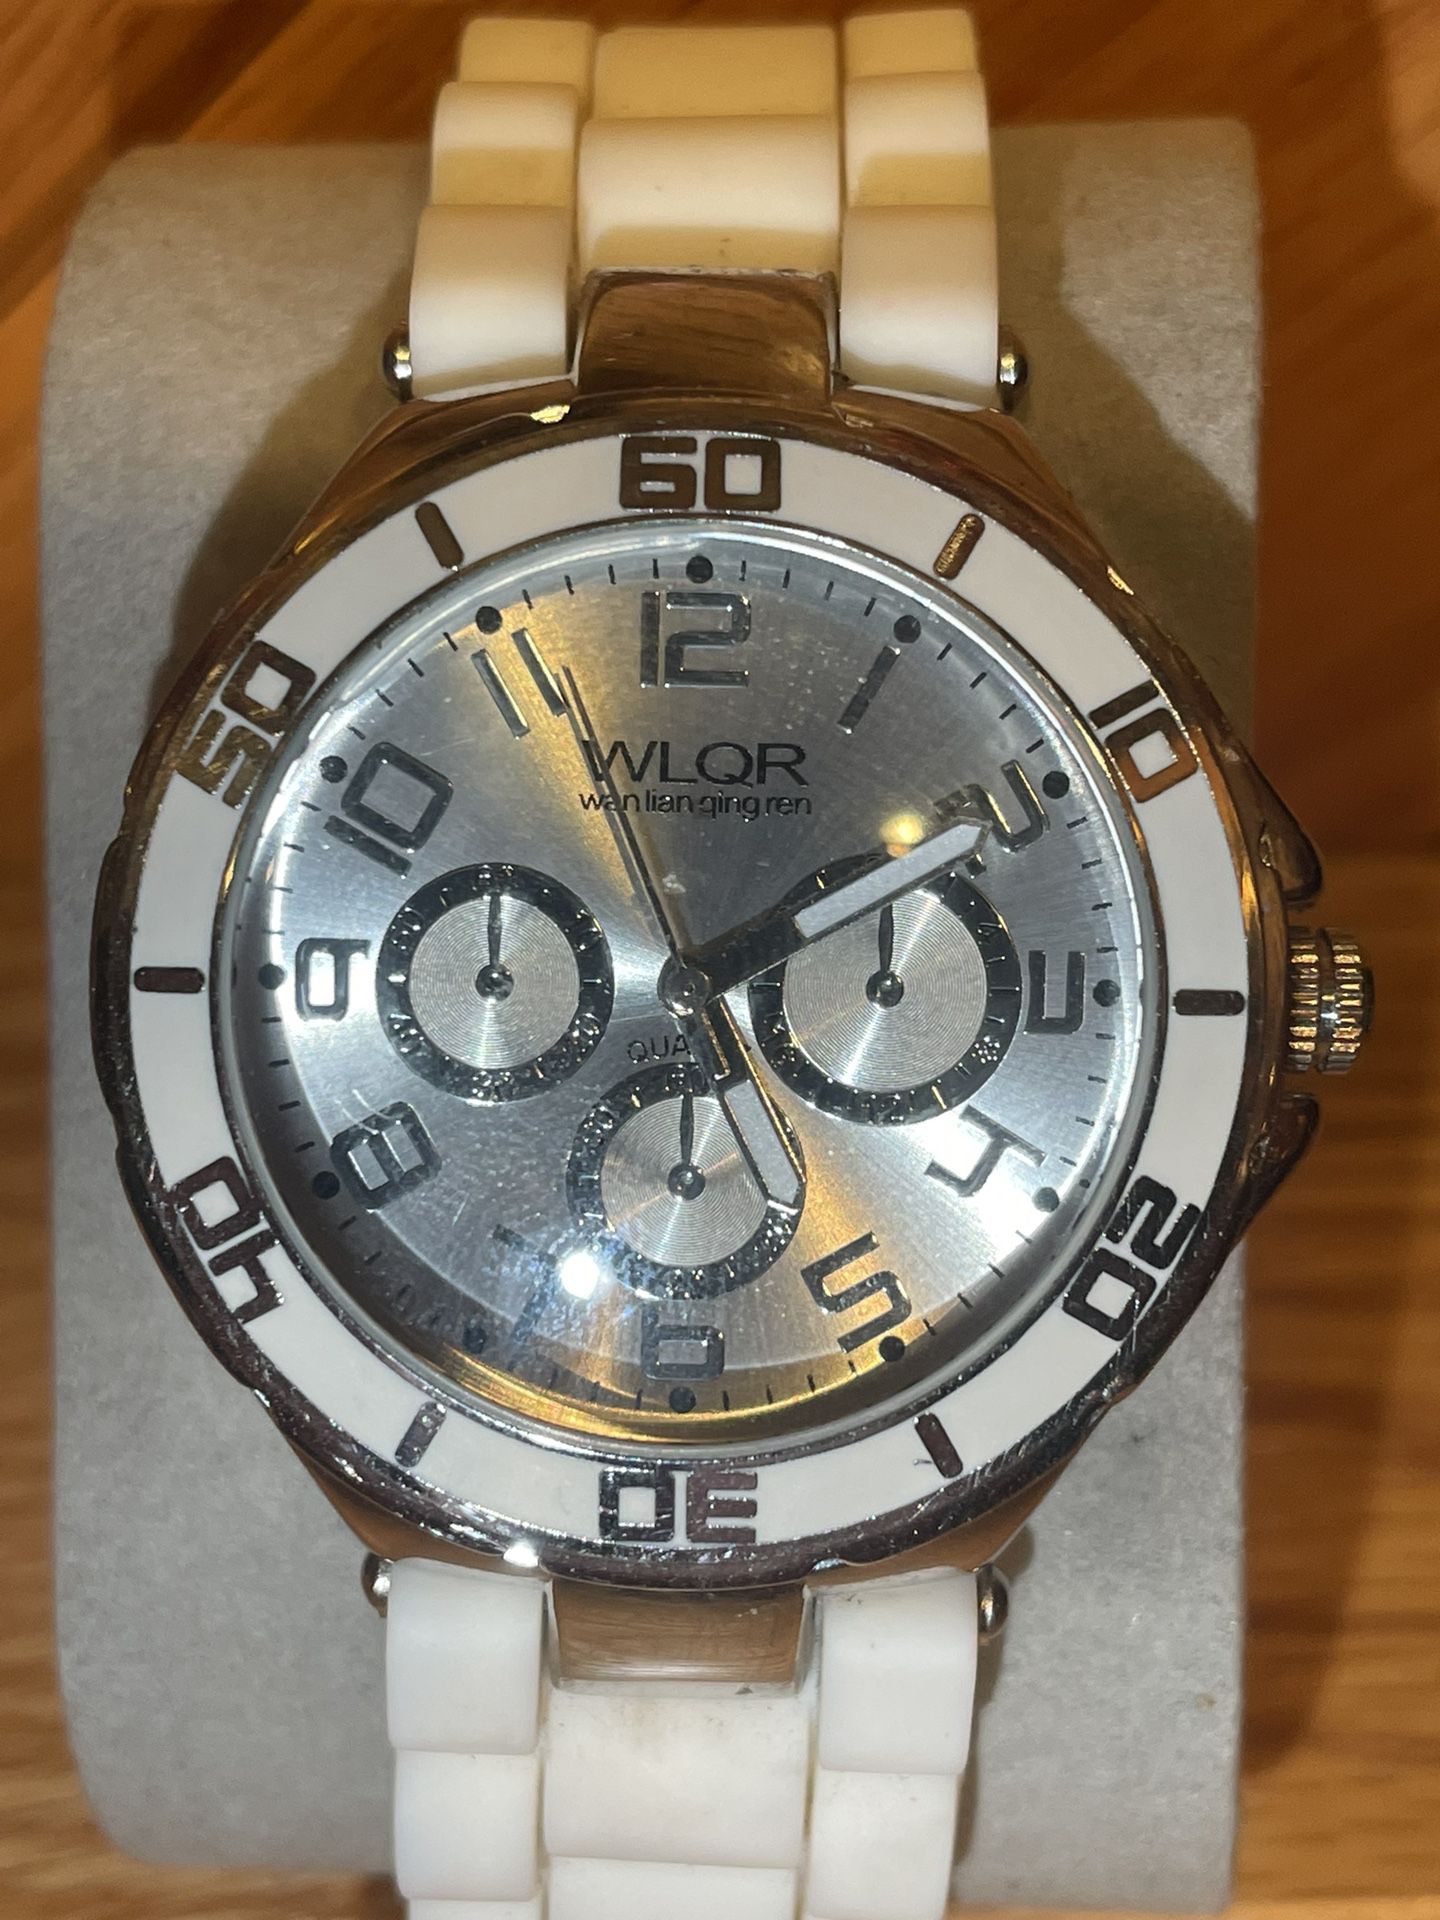 WLQR Silver watch